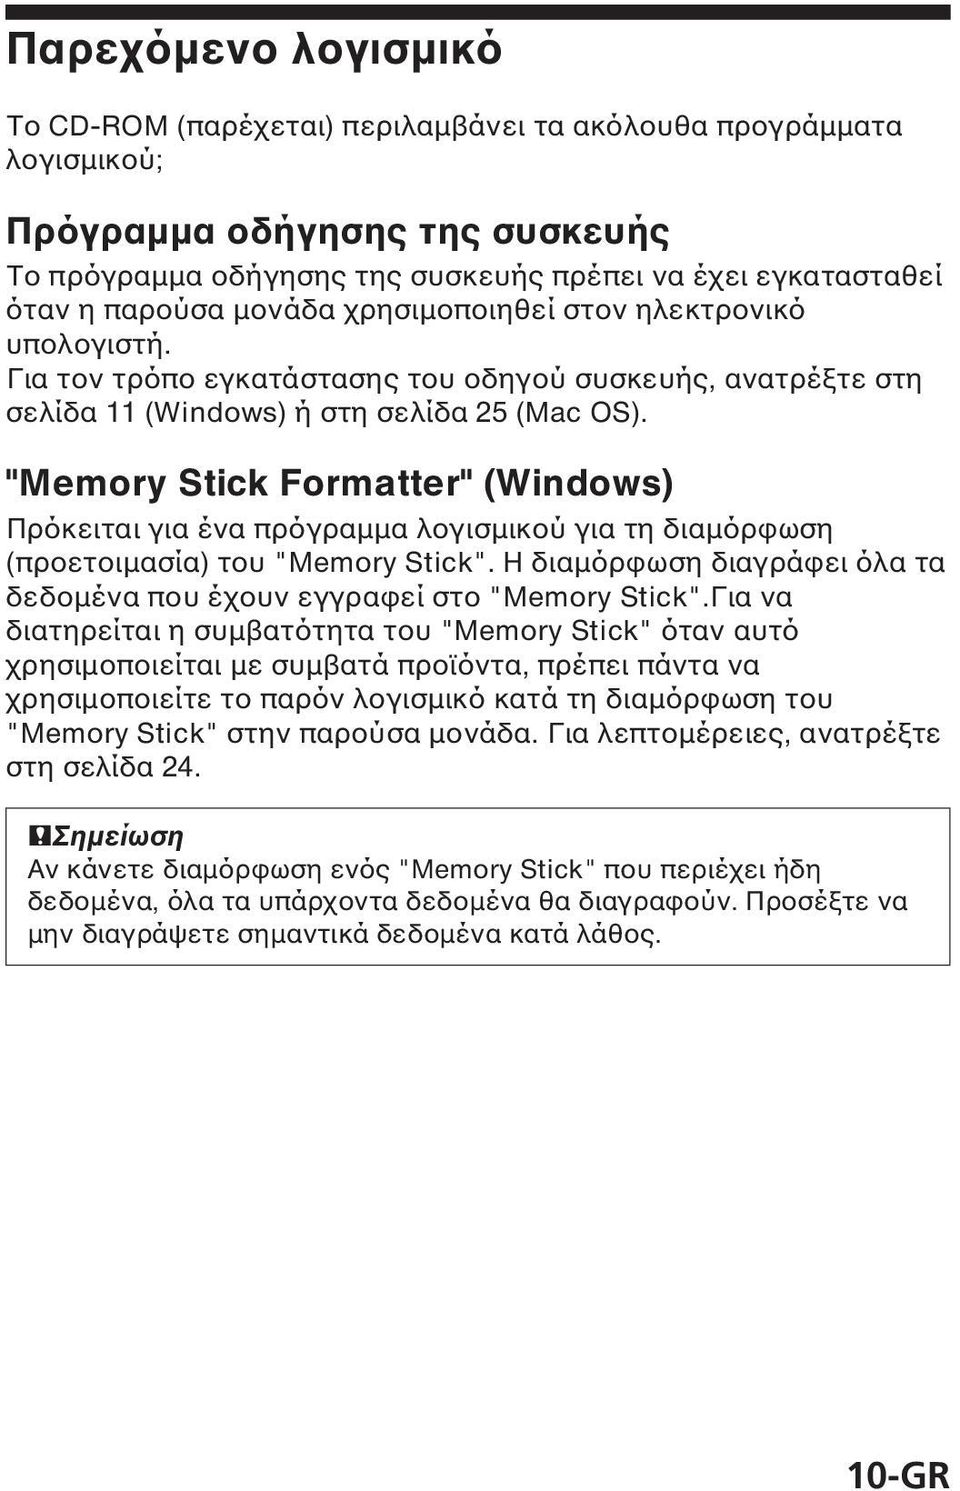 "Memory Stick Formatter" (Windows) Πρόκειται για ένα πρόγραµµα λογισµικού για τη διαµόρφωση (προετοιµασία) του "Memory Stick".